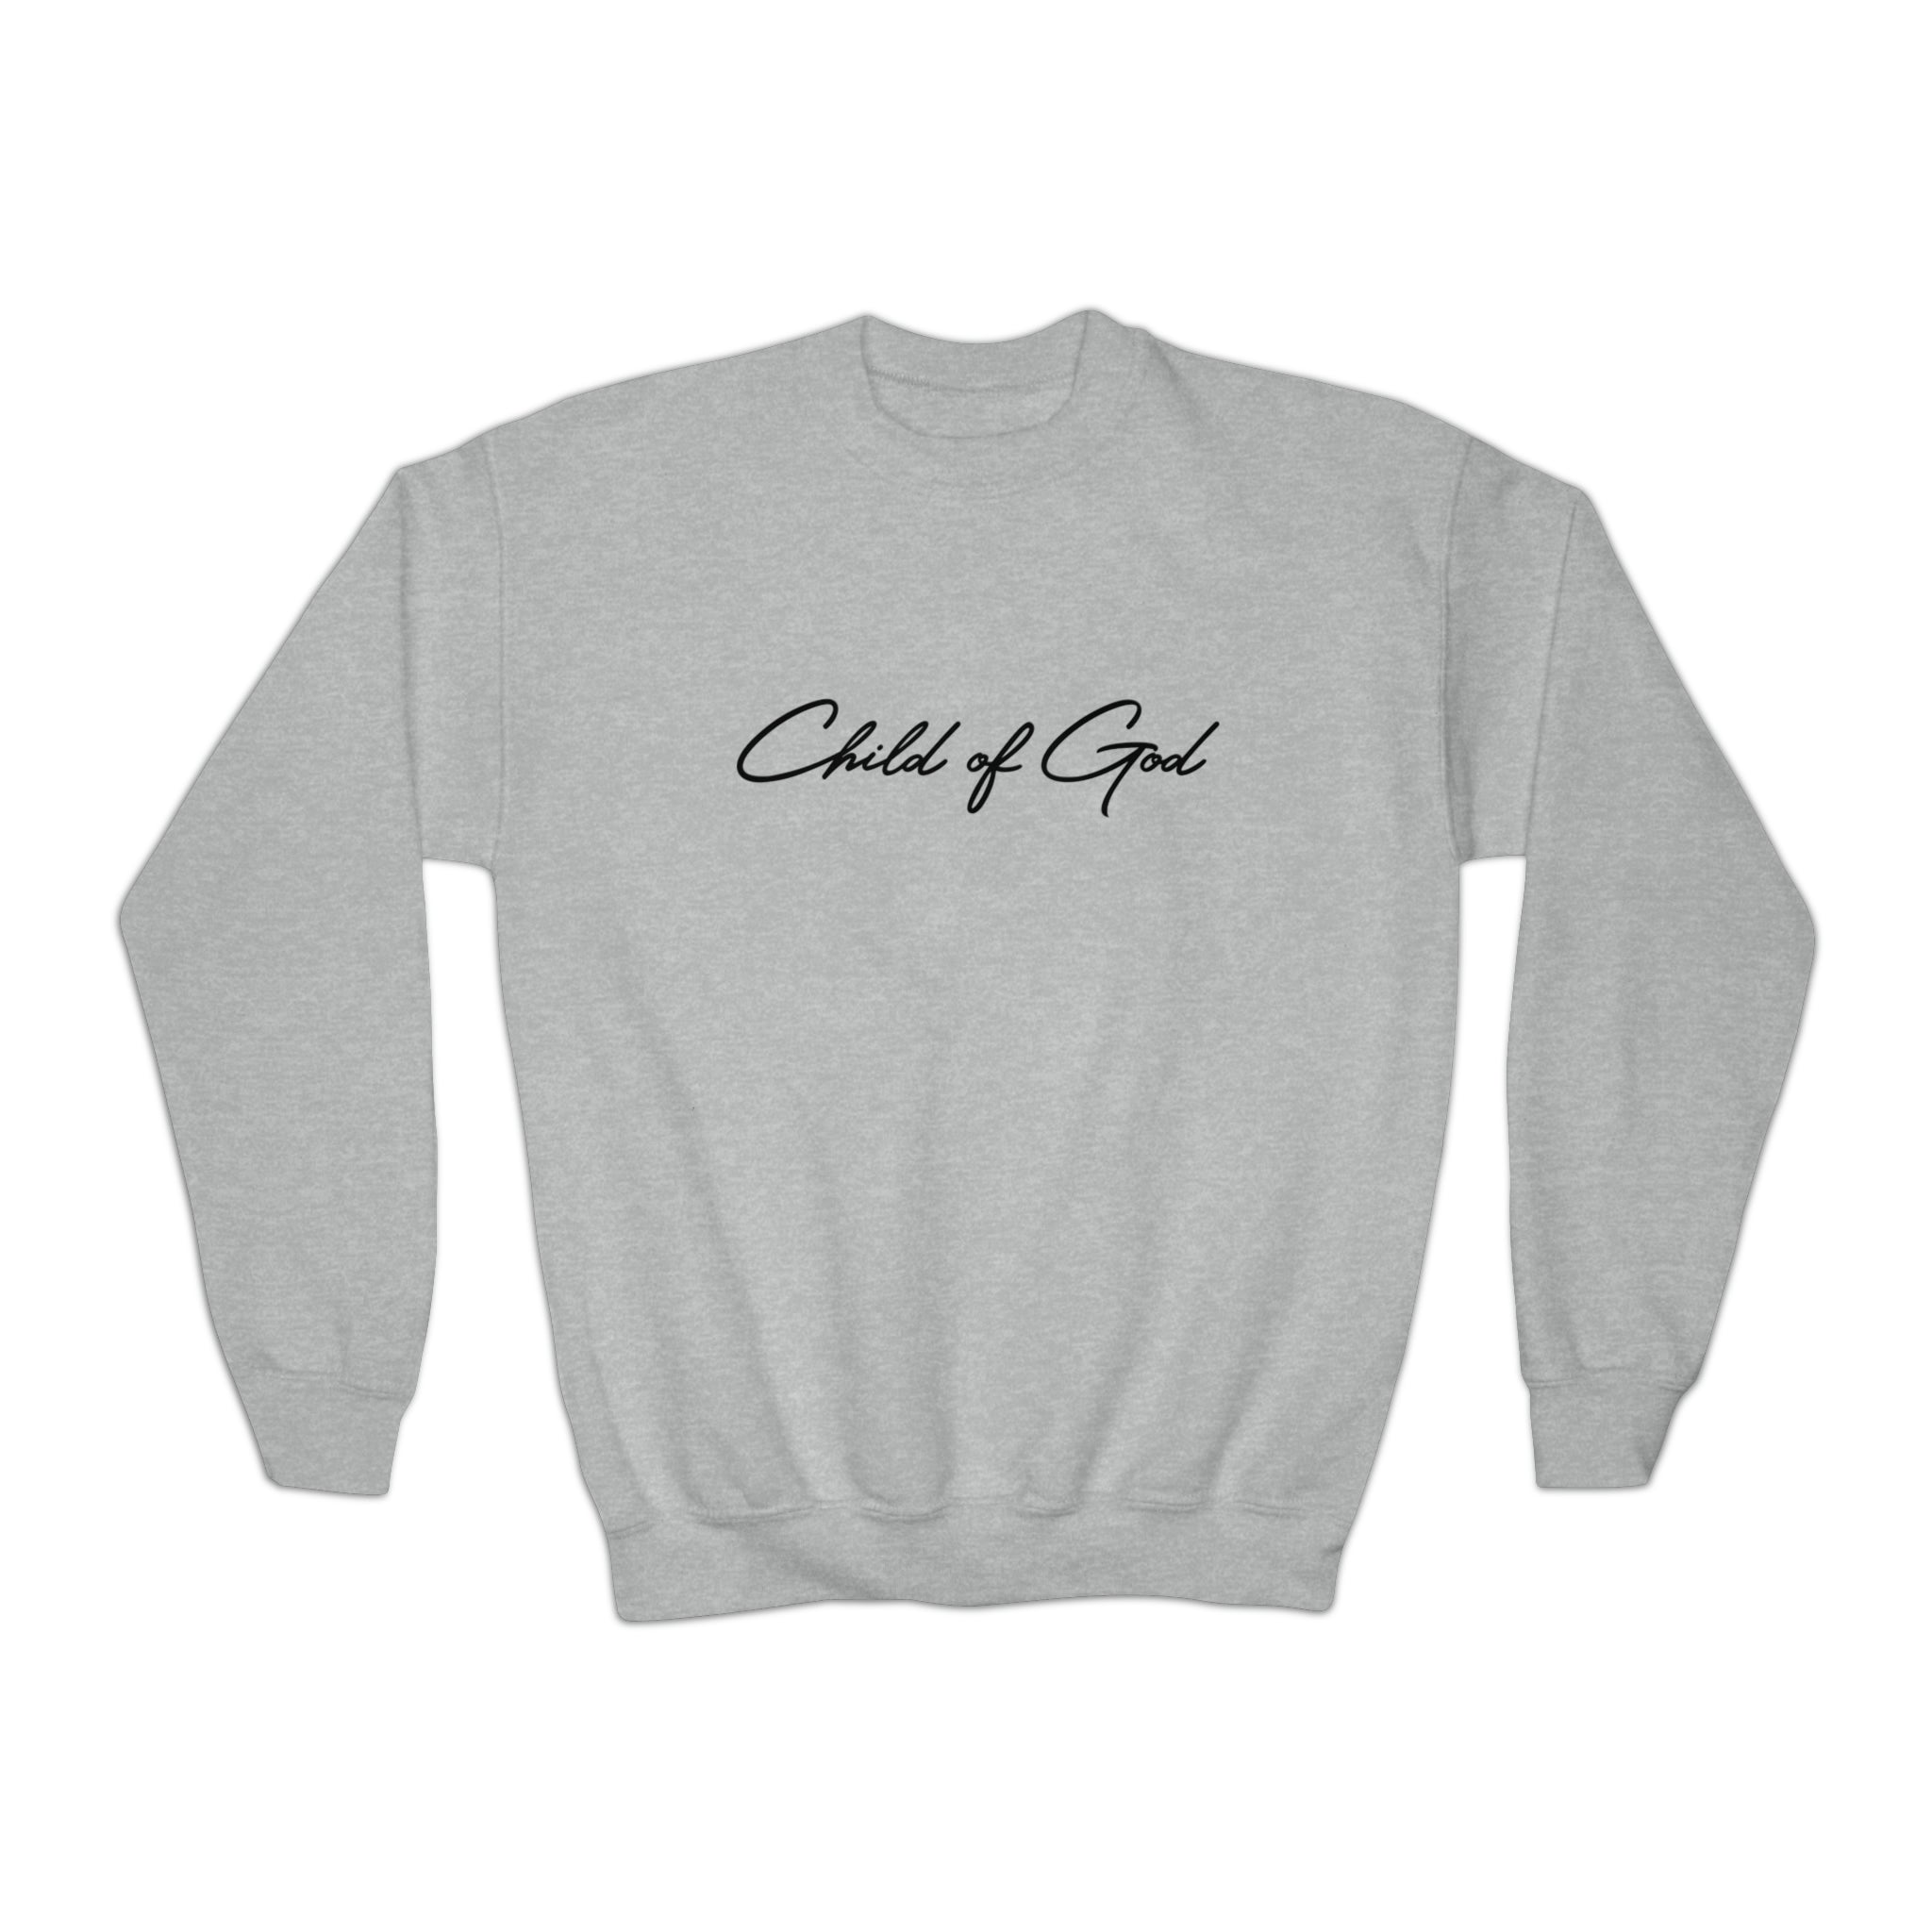 Classic Design Youth Crewneck Sweatshirt - Child of God Project